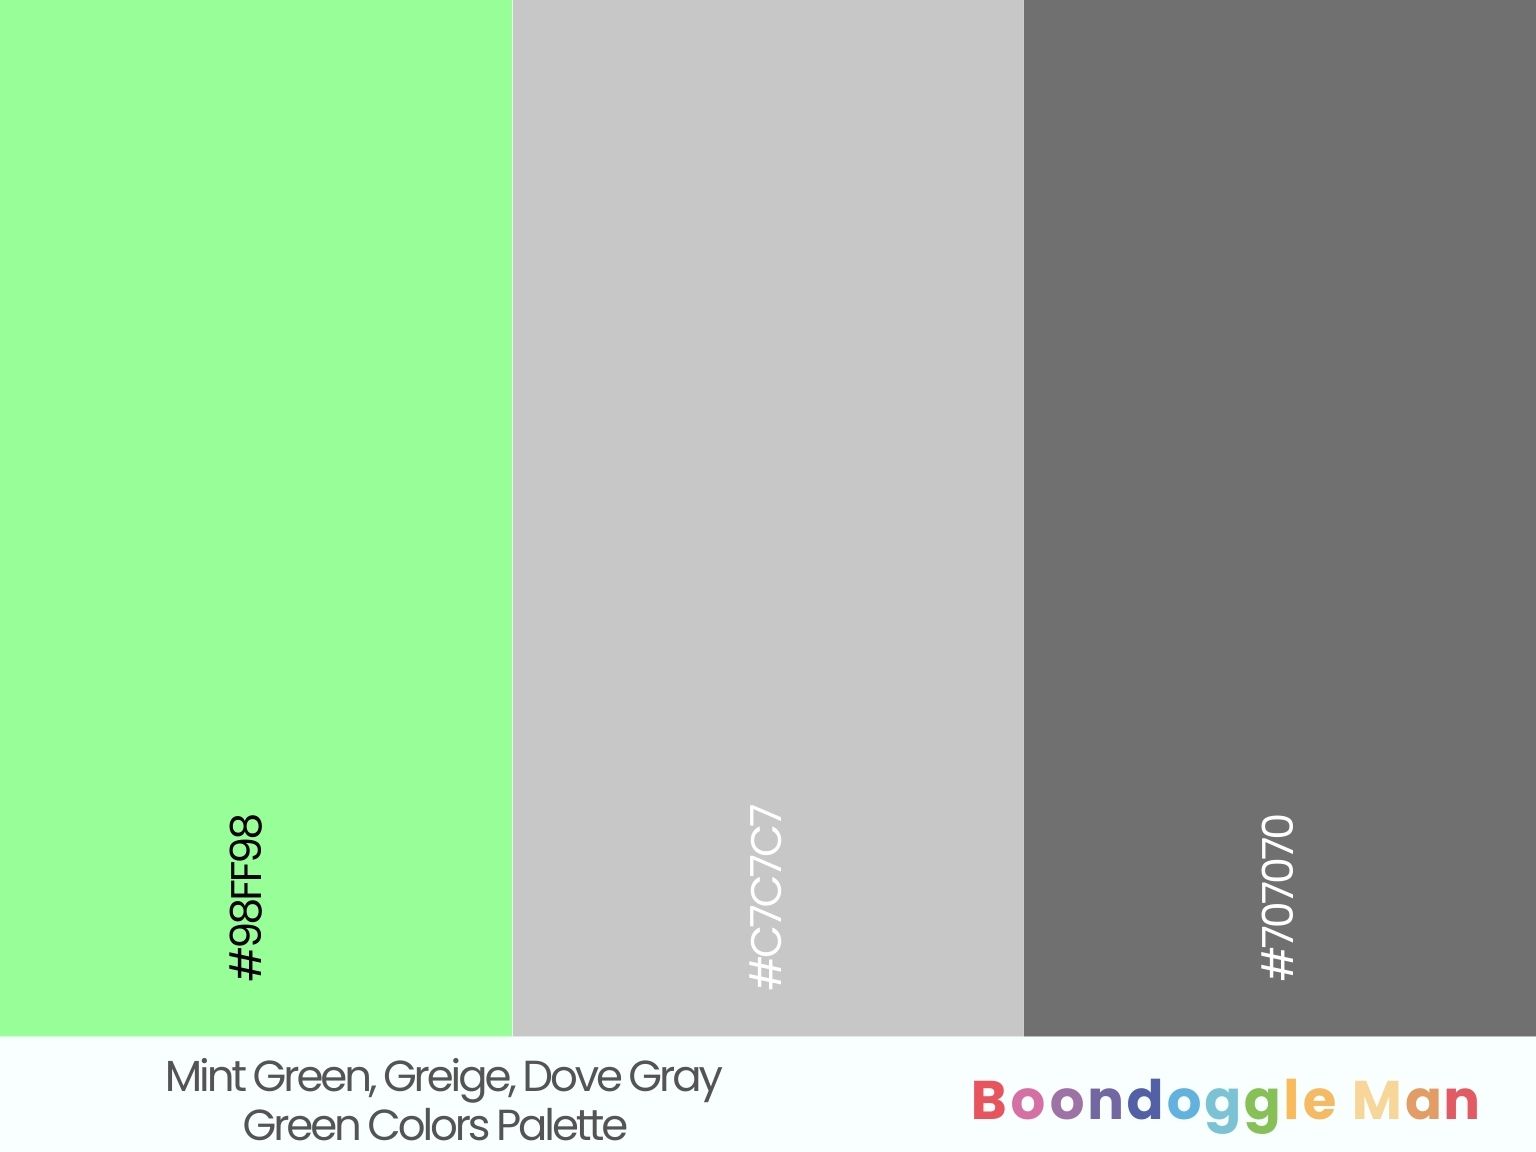 Mint Green, Greige, Dove Gray